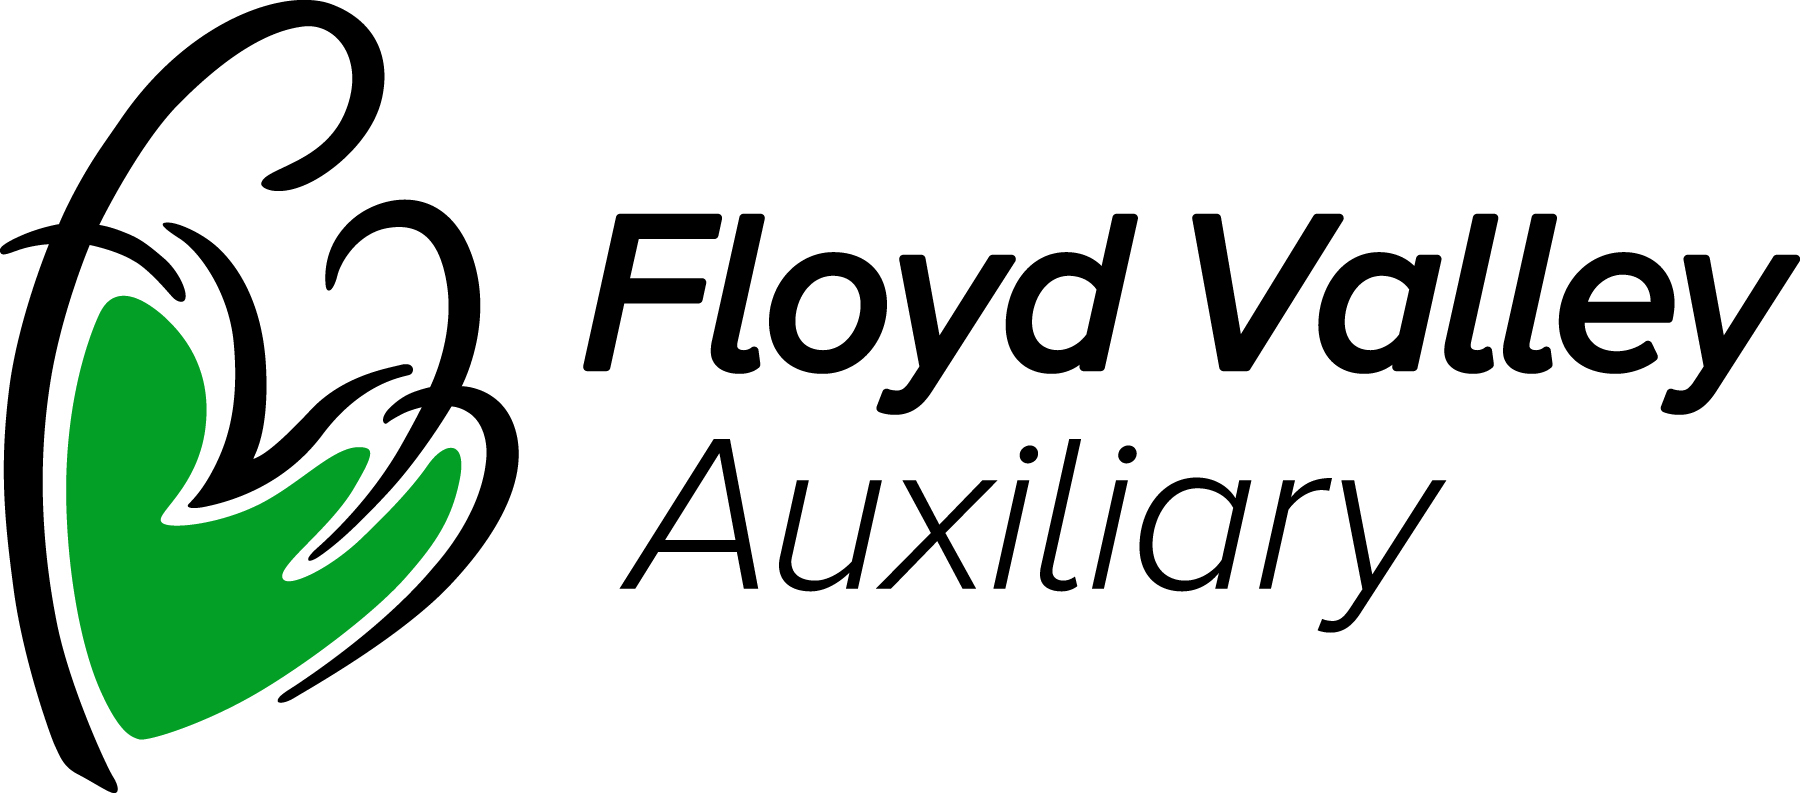 Floyd Valley Auxiliary Logo